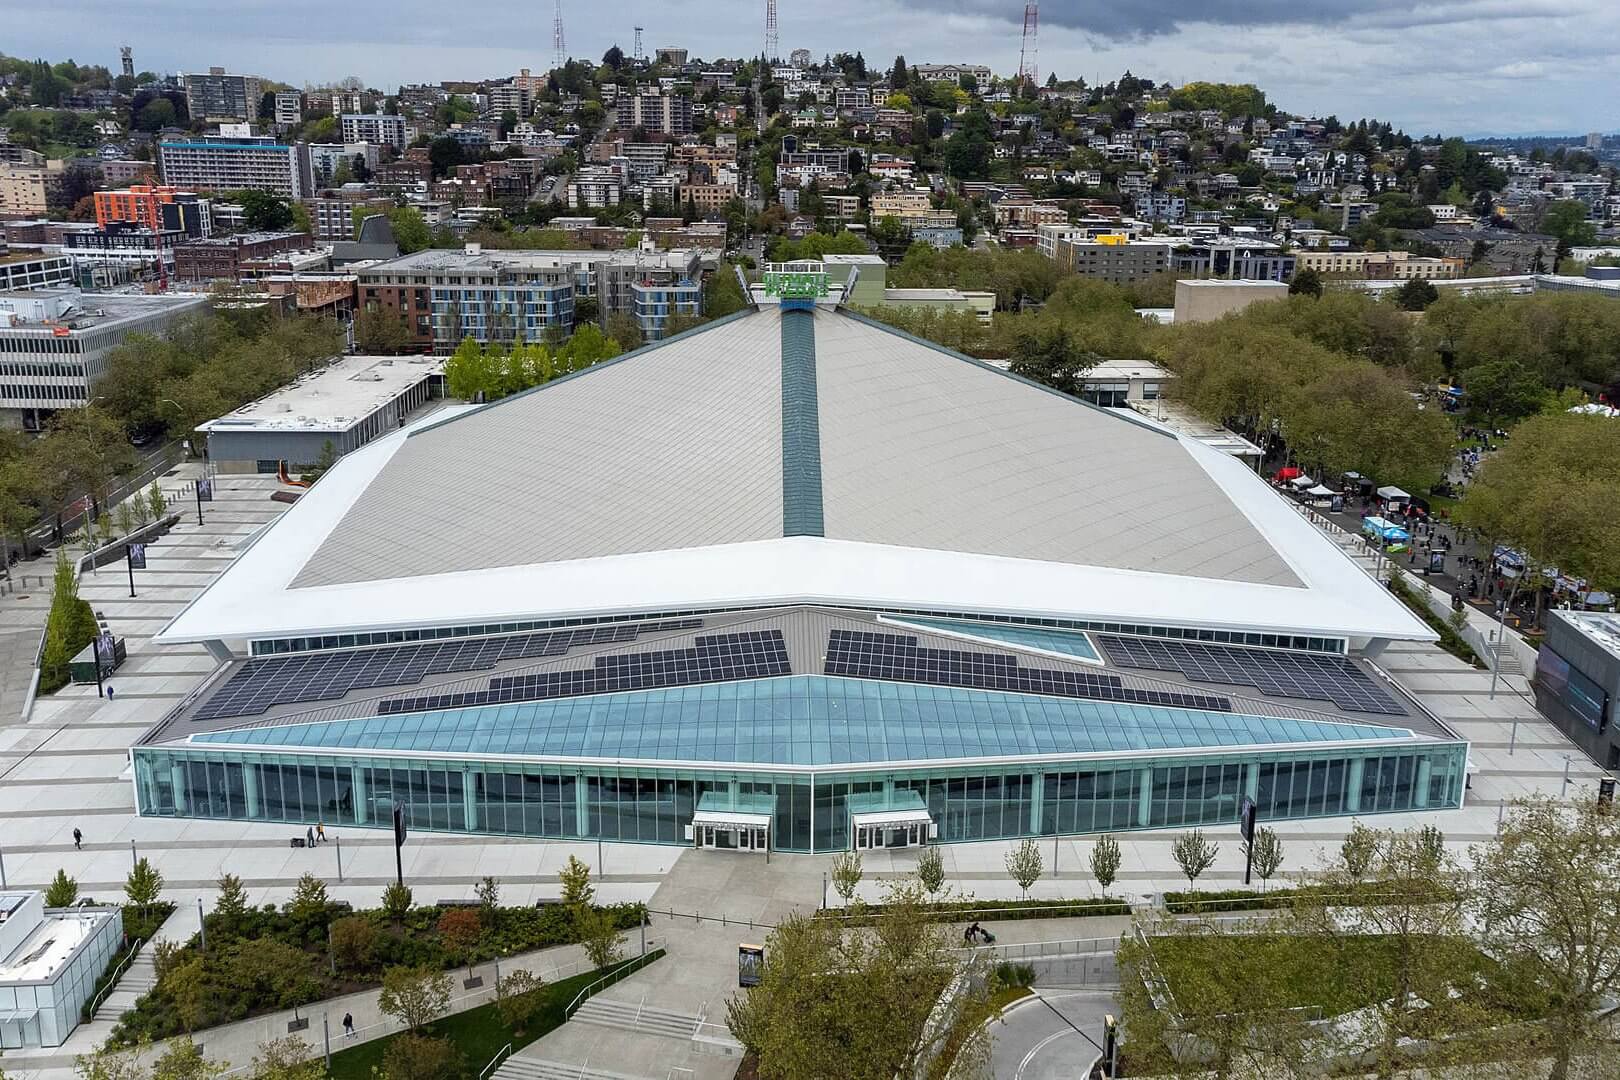 Seattle's Climate Pledge Arena